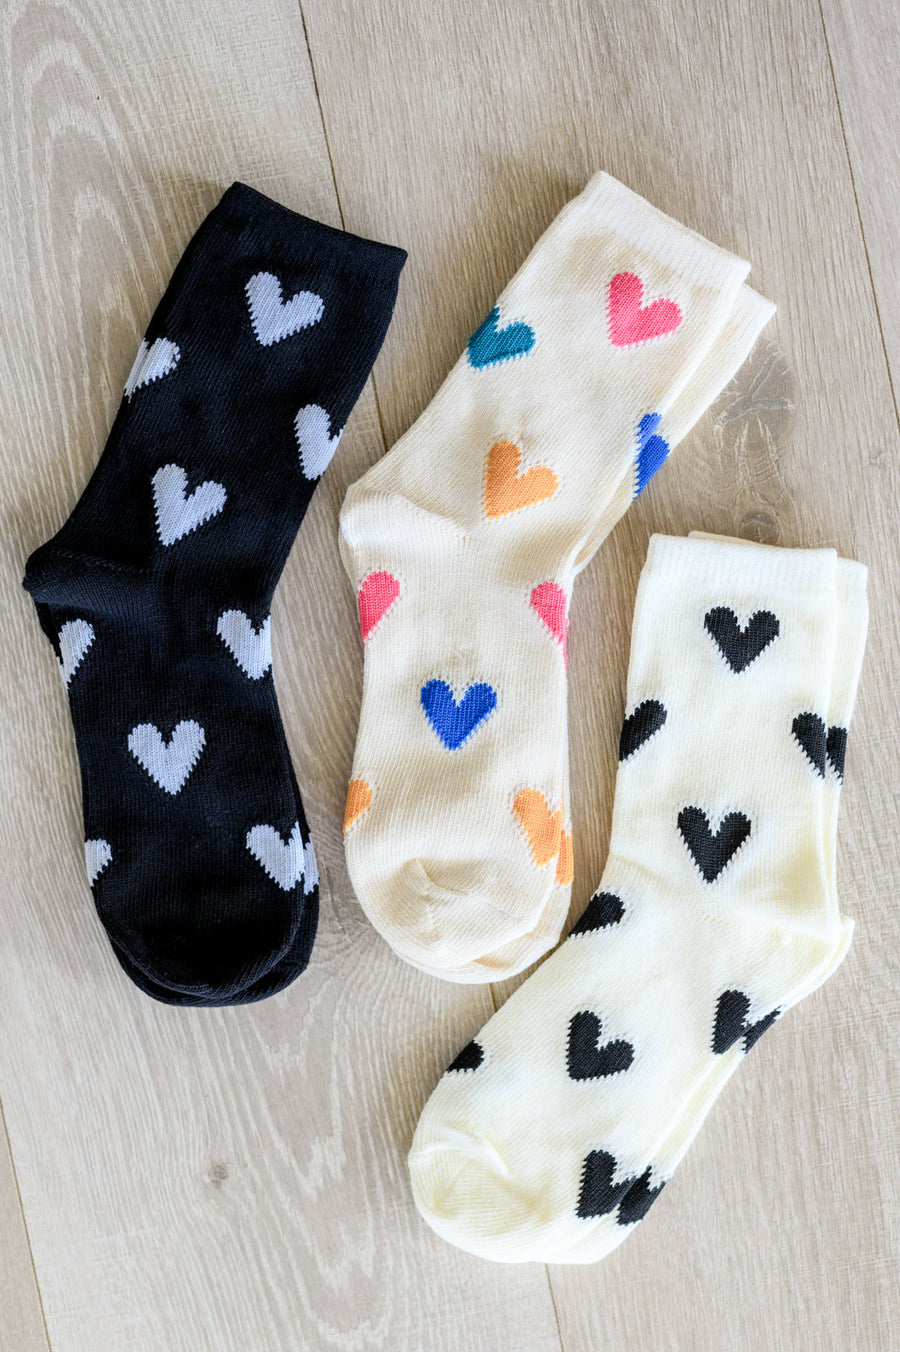 Woven Hearts Everyday Socks (Set of 3)